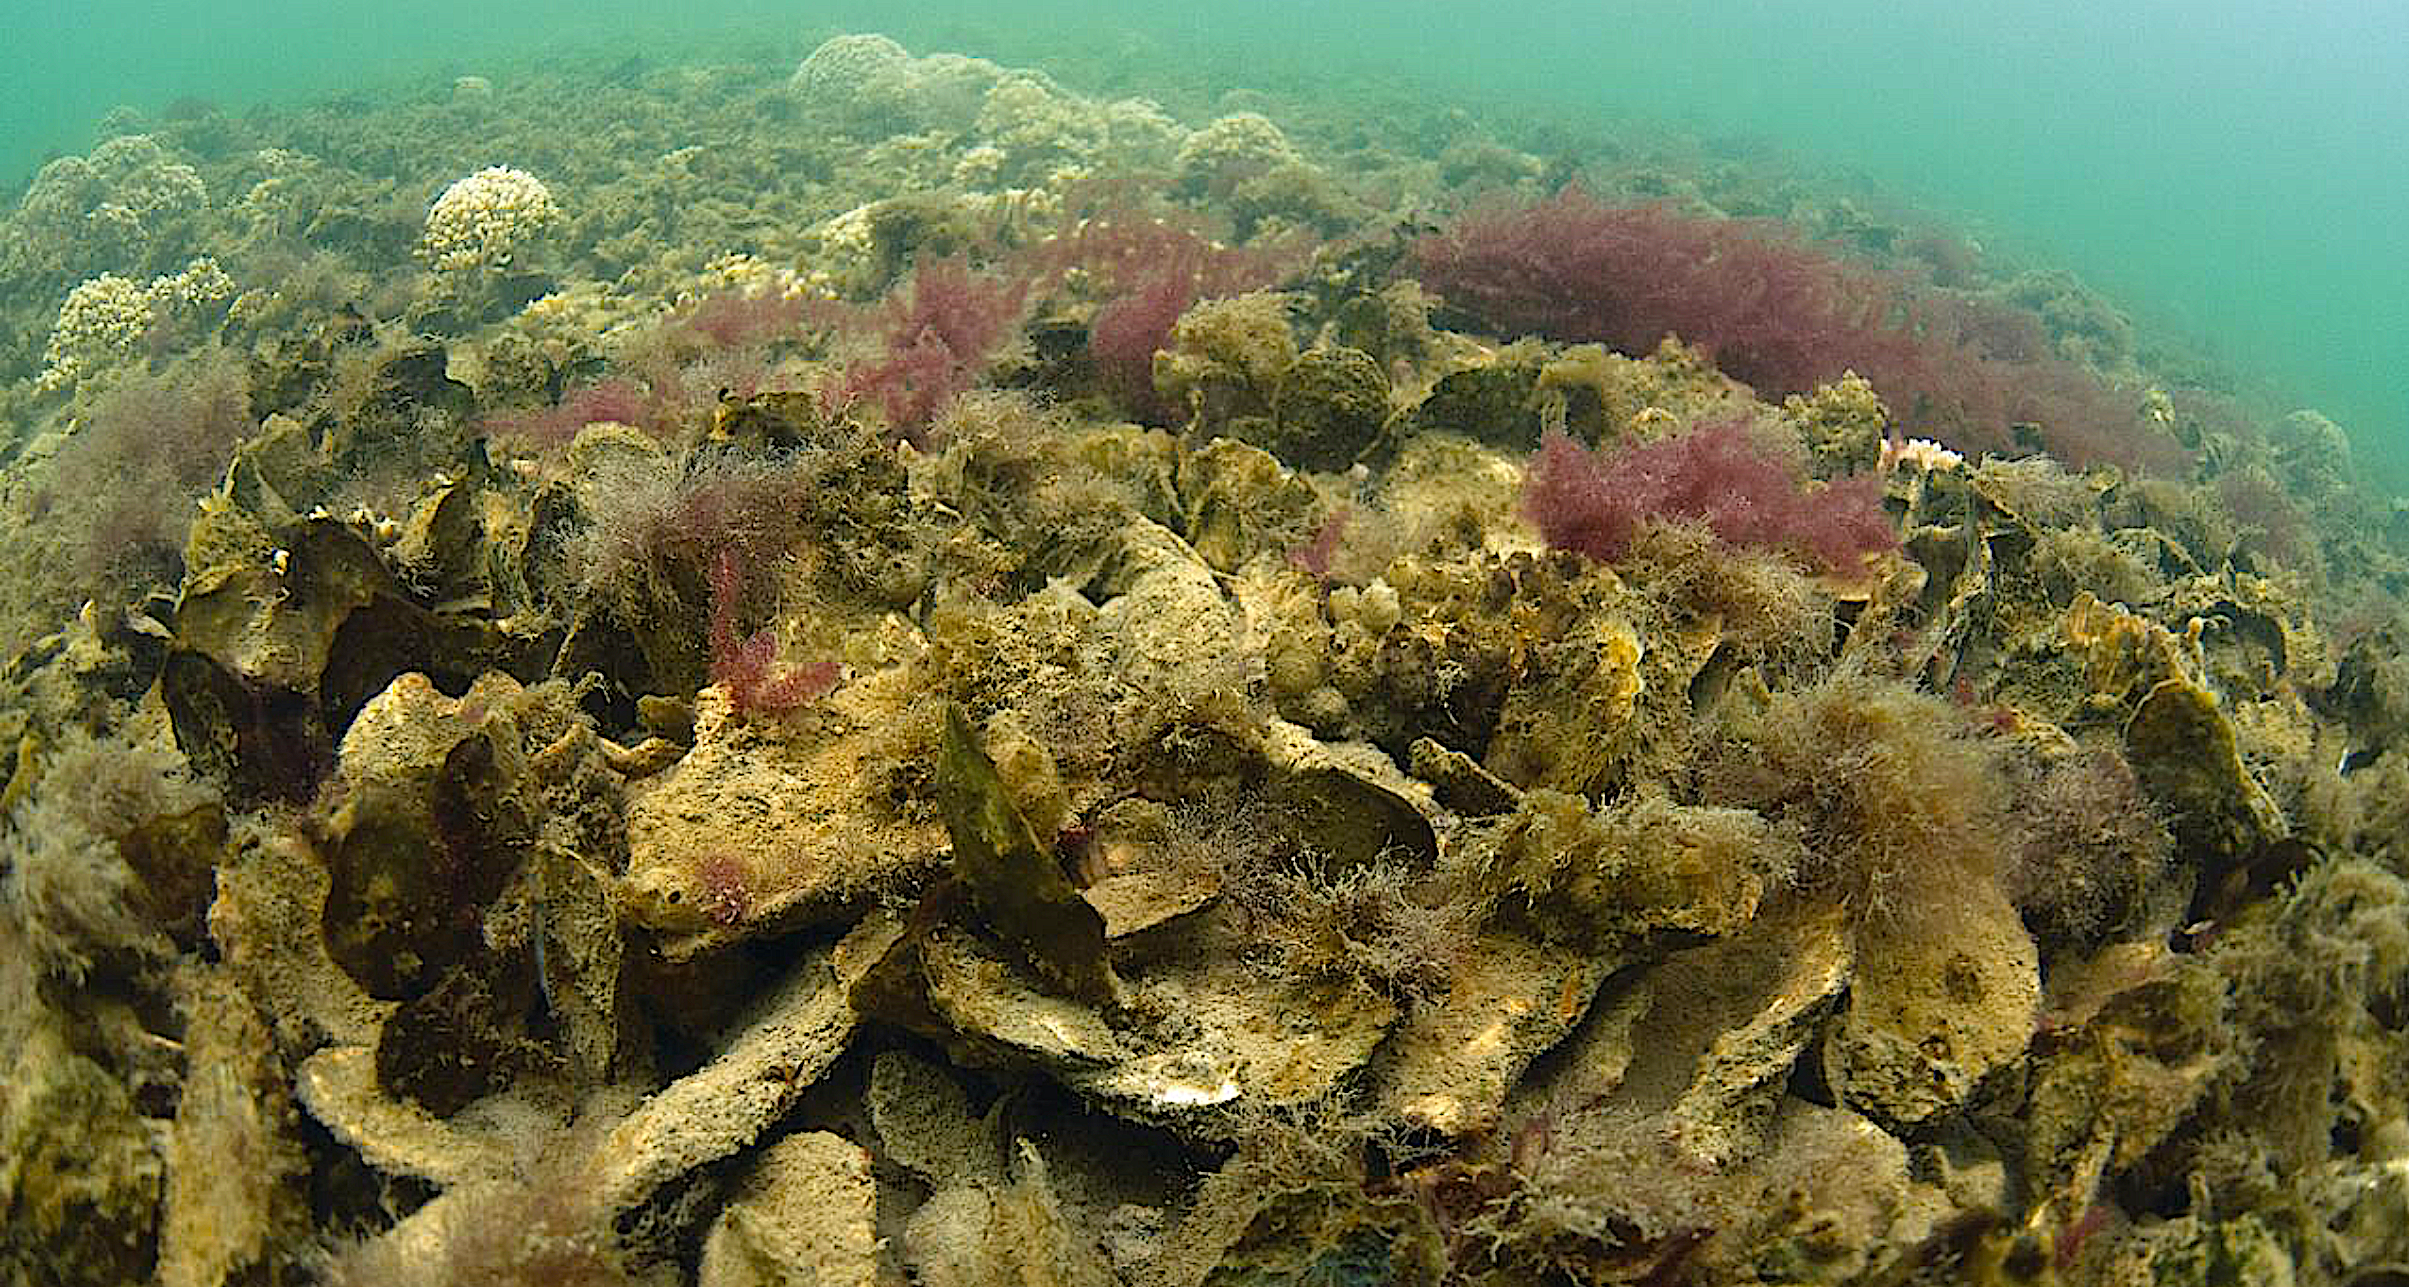 Chesapeake Bay oyster reef image via NOAA.